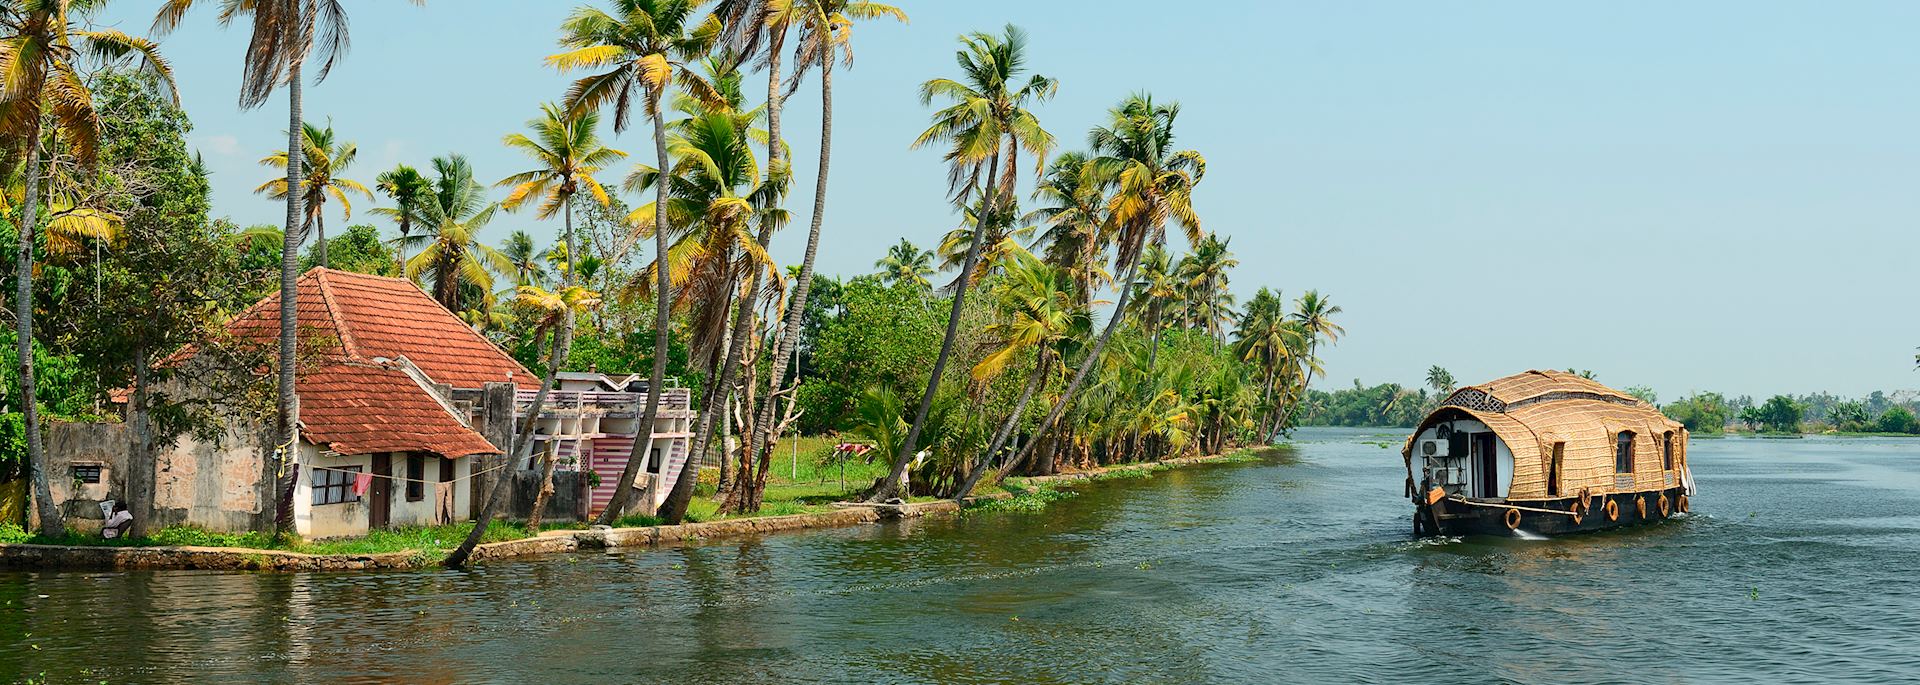 Houseboat on the Kerala backwaters